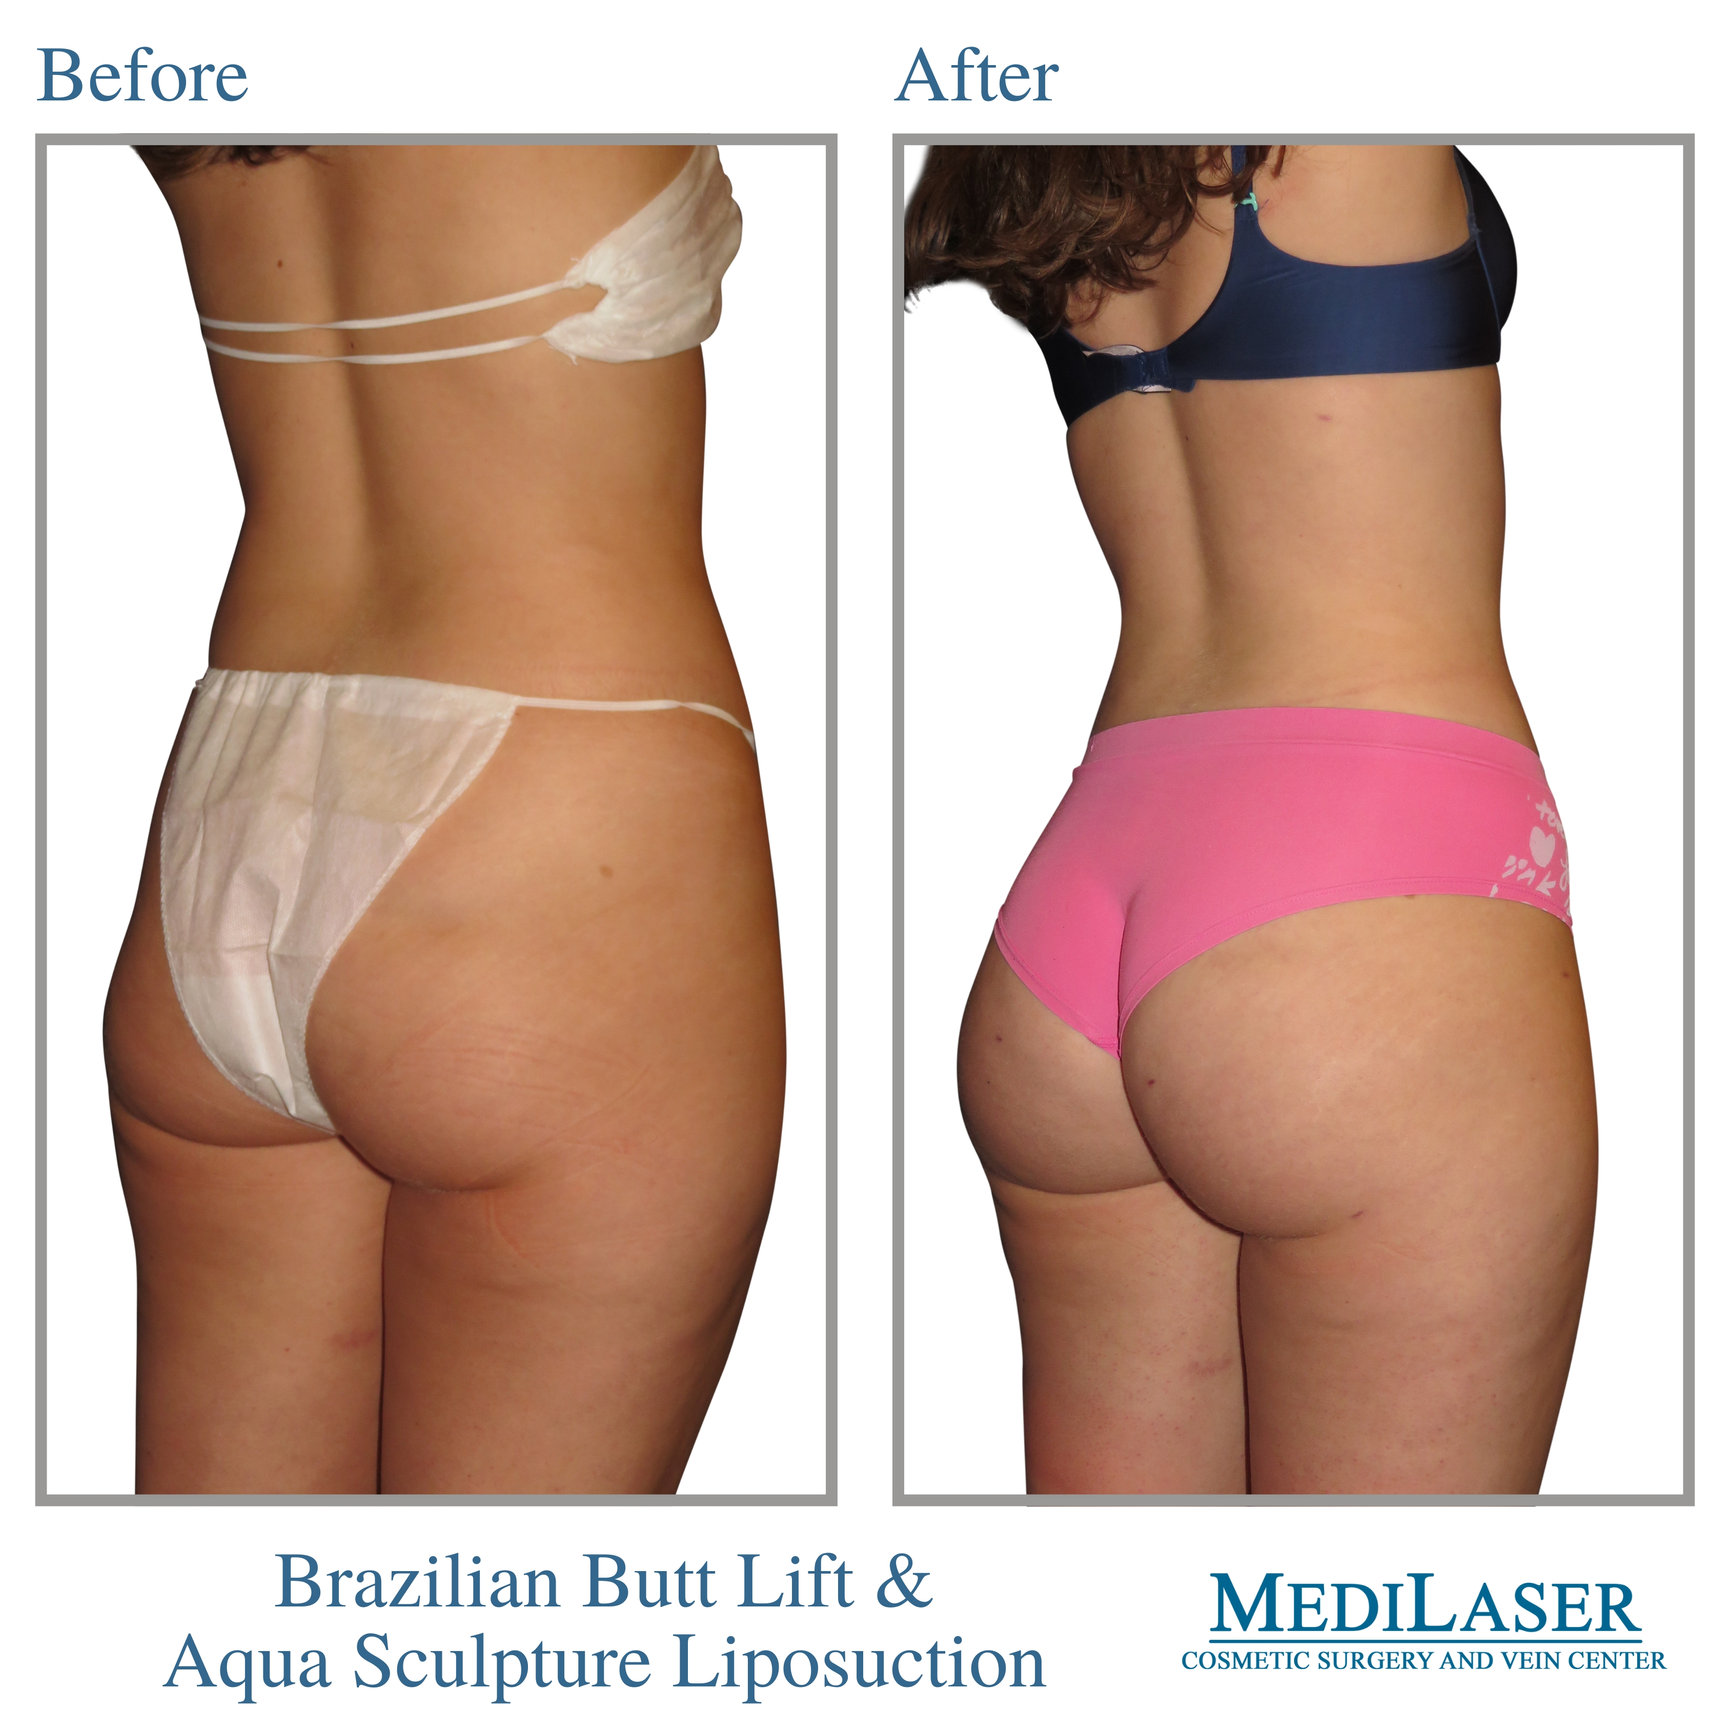 Brazilian Butt Lift Before and After - Medilaser Surgery and Vein Center